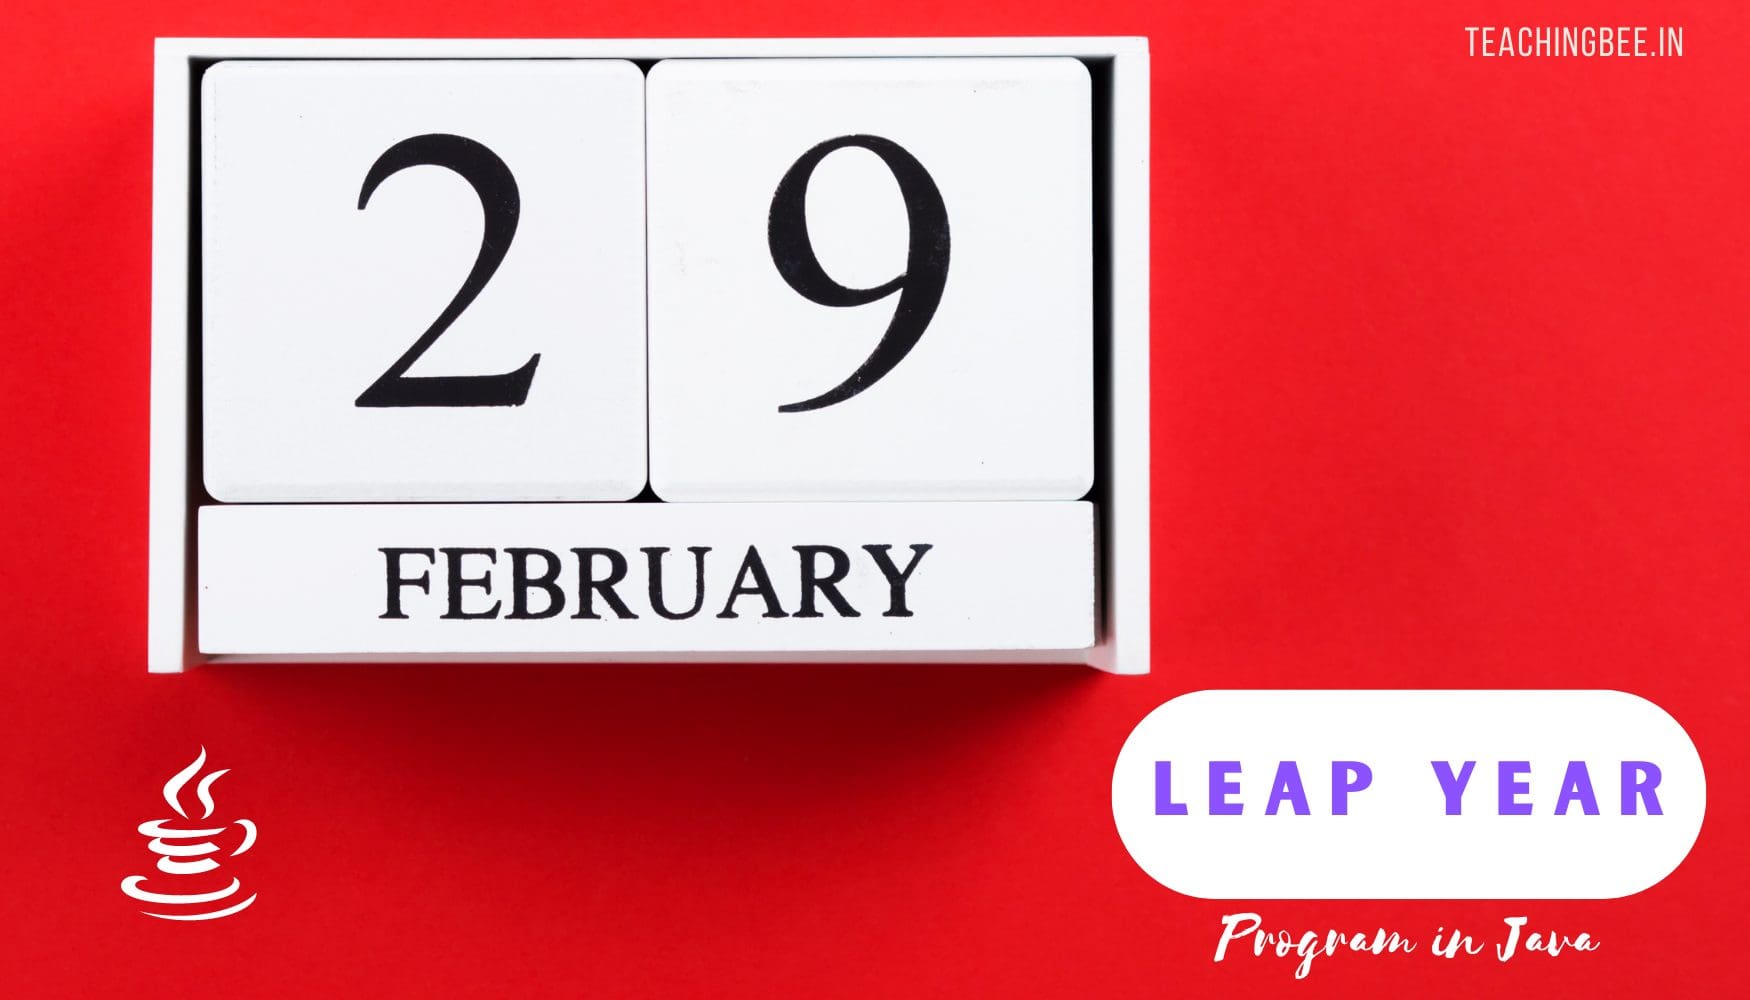 Leap Year Program In Java - TeachingBee